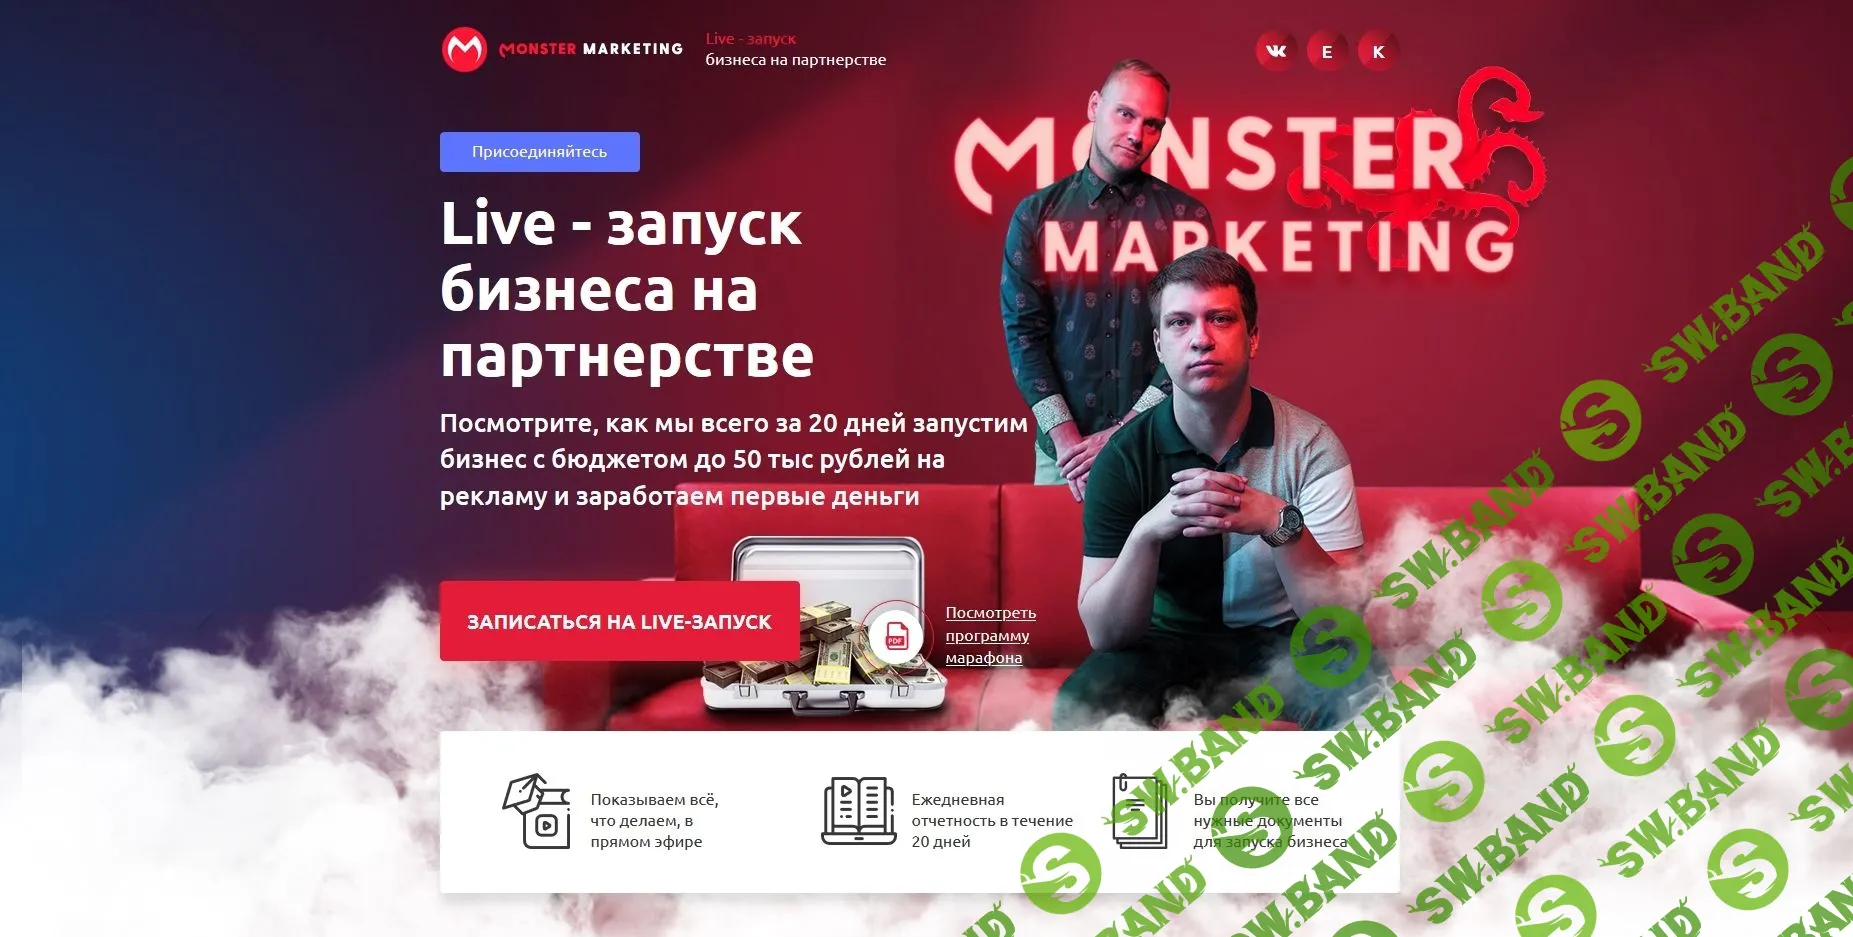 [Monster Marketing] Live - запуск бизнеса на партнерстве (2019)